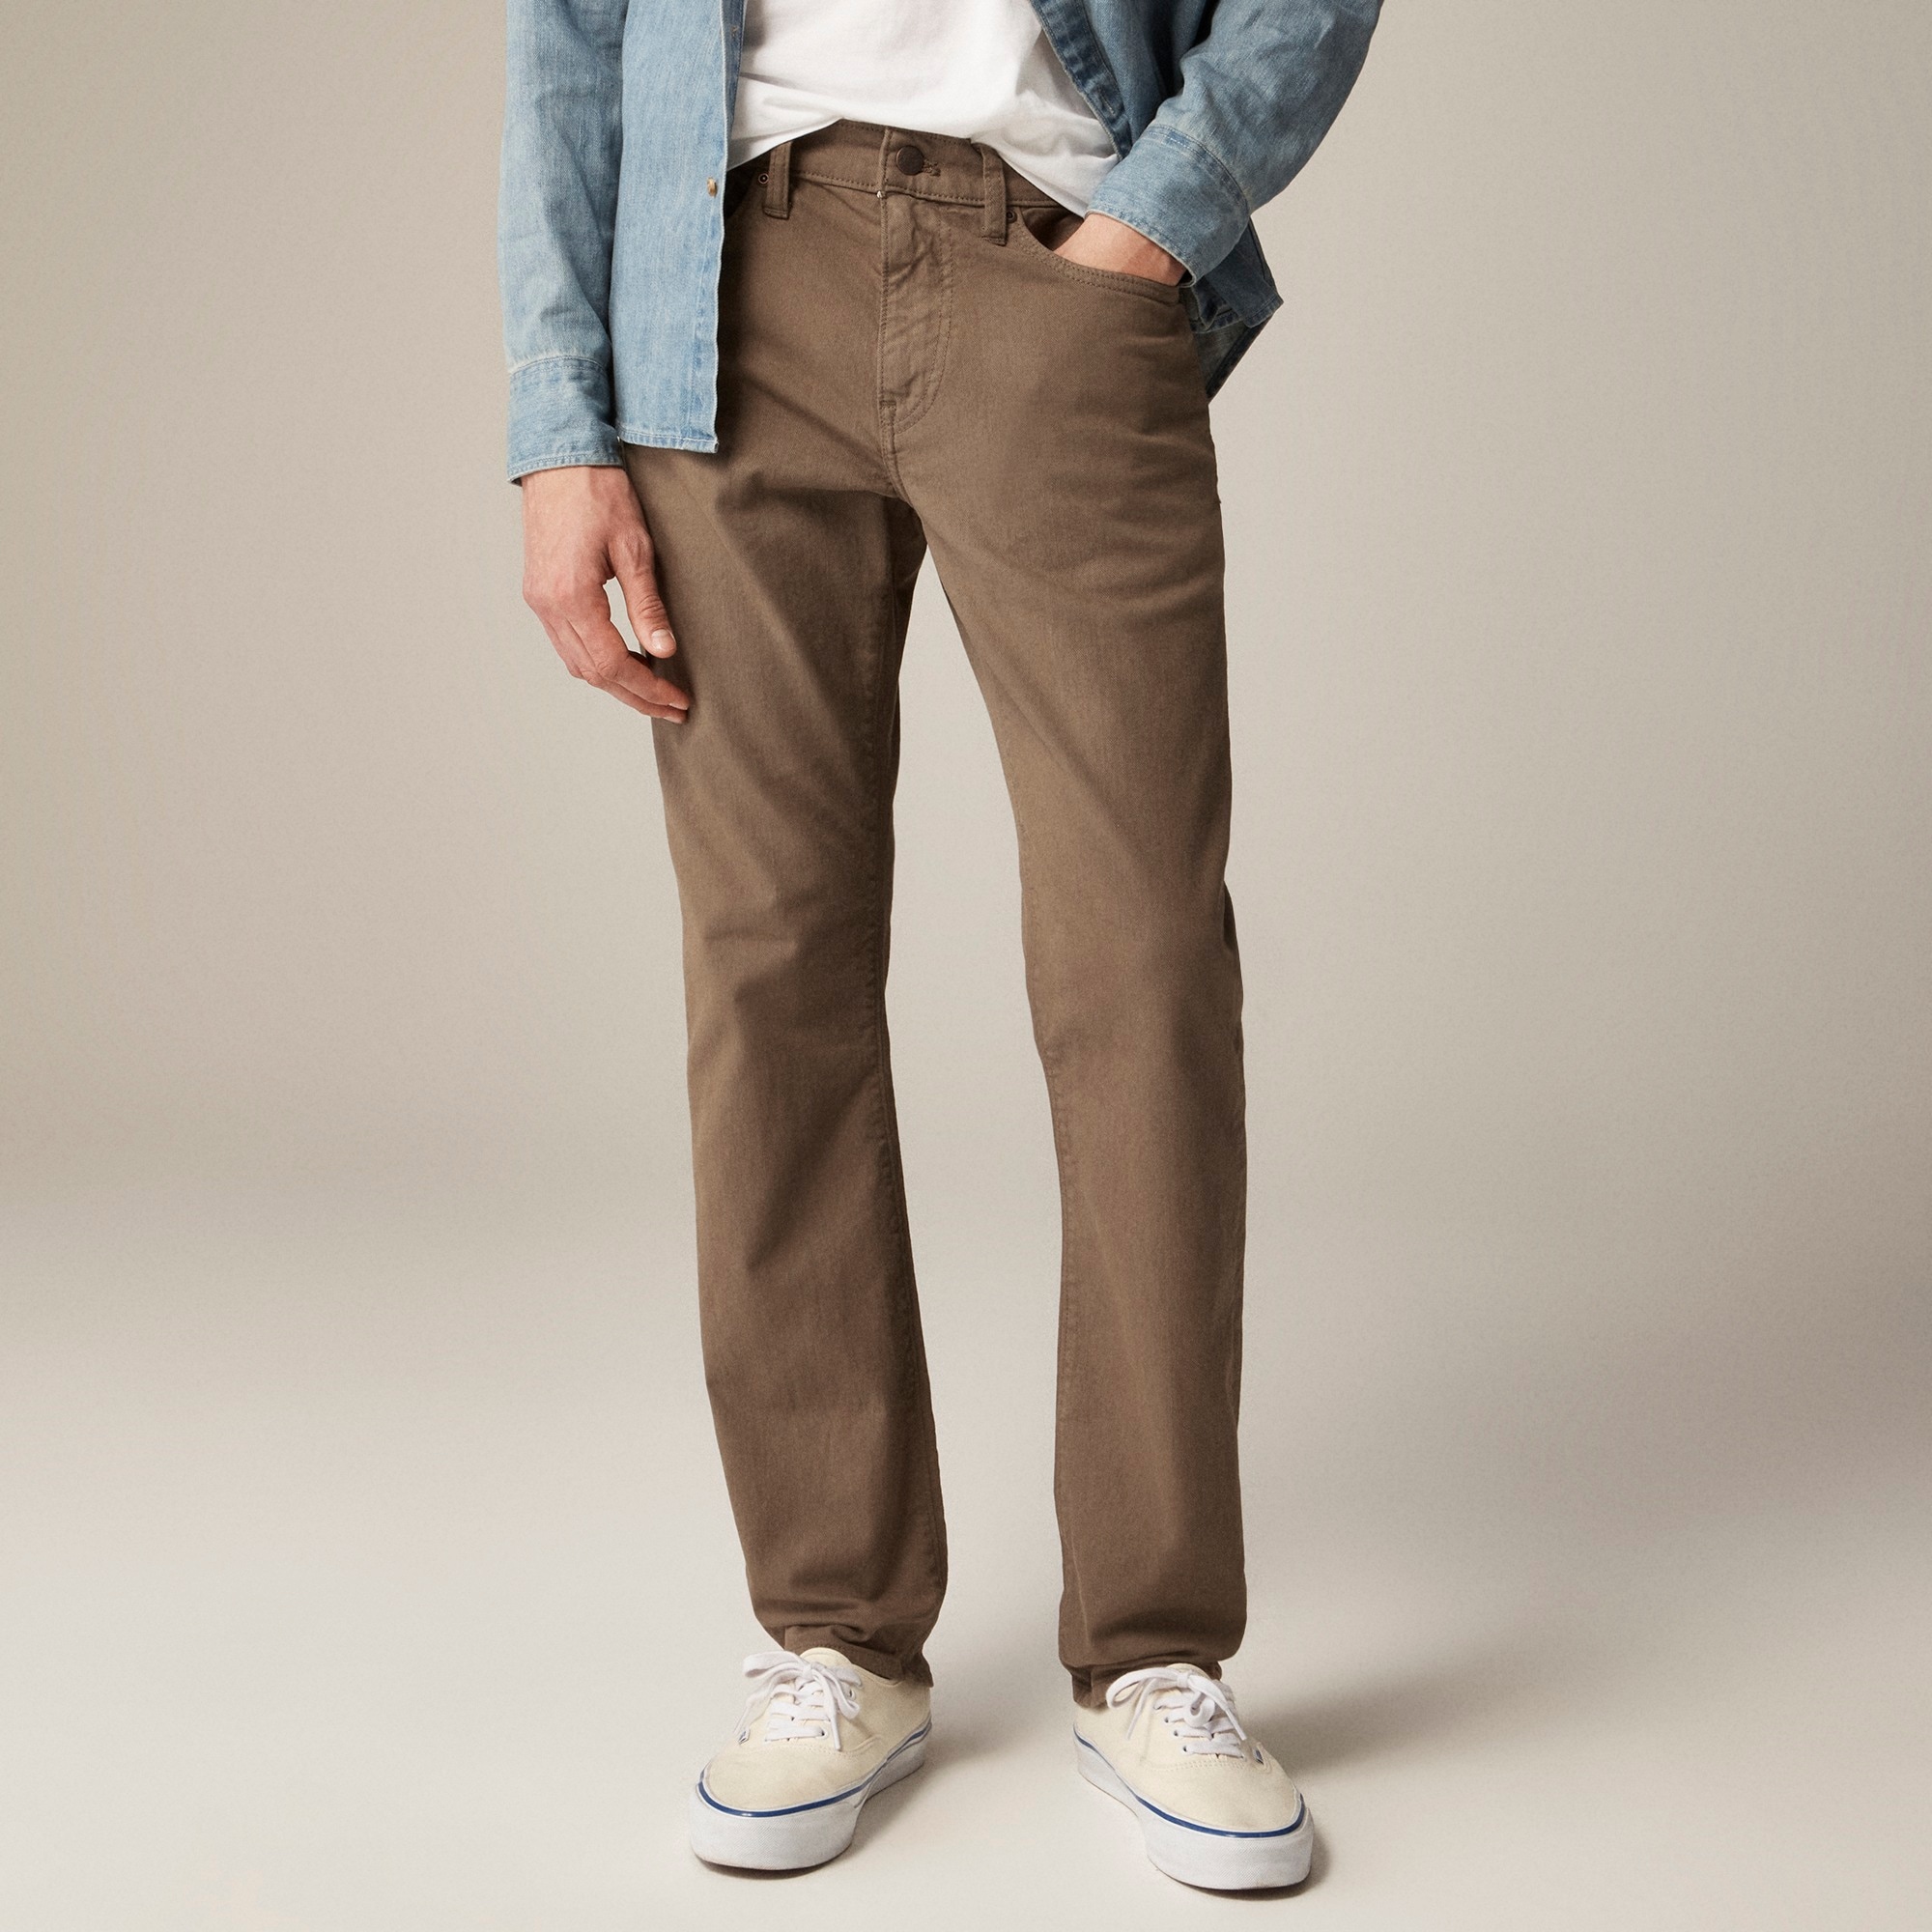 Jcrew 484 Slim-fit garment-dyed five-pocket pant